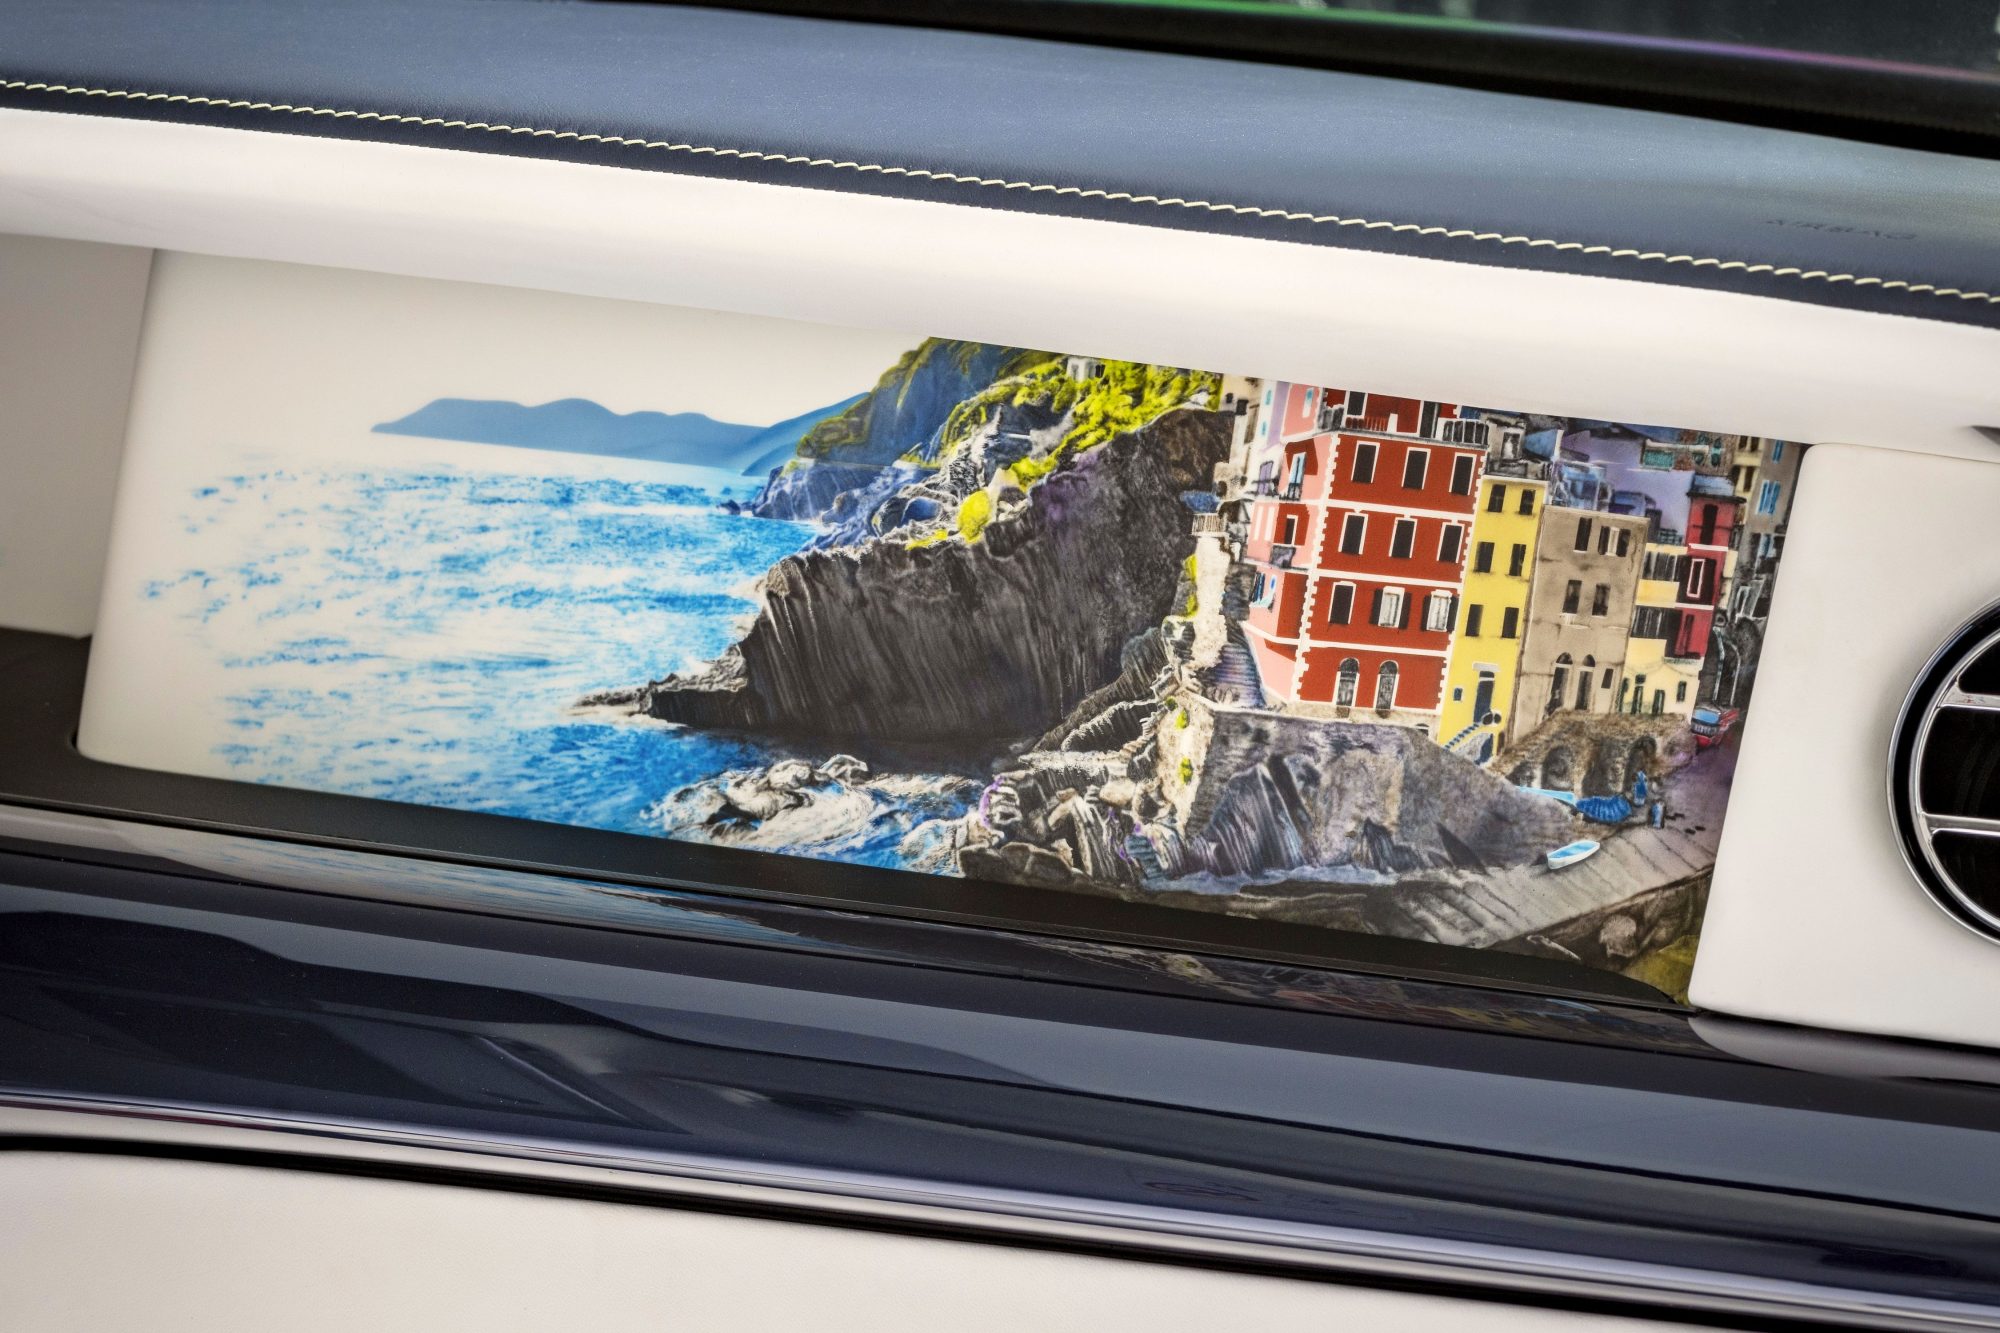 Rolls-Royce Phantom inspired by Cinque Terre: Celebrating the Italian Riviera